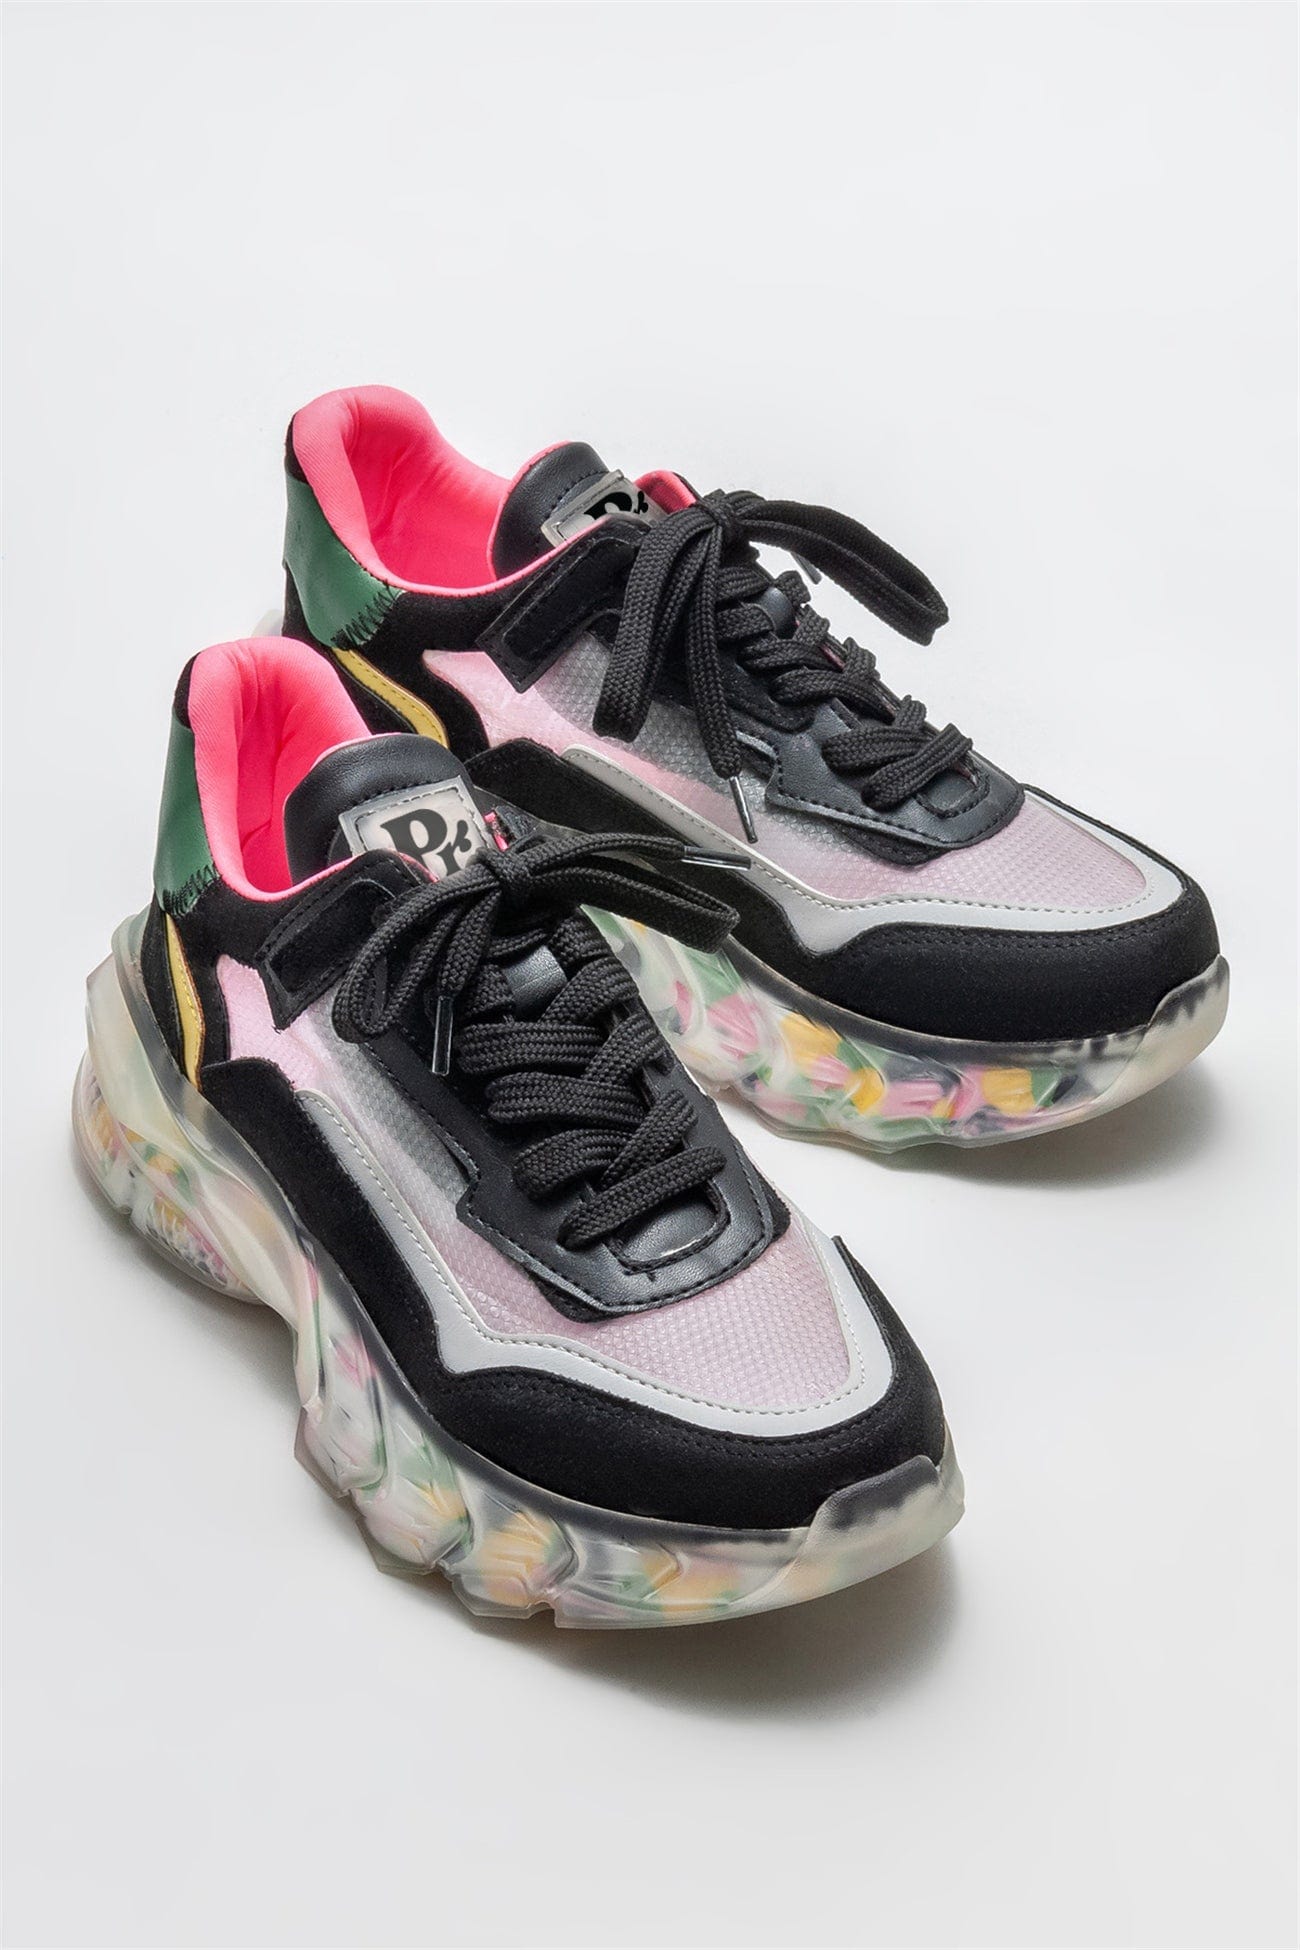 Prologue Shoes The Hybrid -  Women’s Black/Green/Pink Vegan Comfort Sneakers